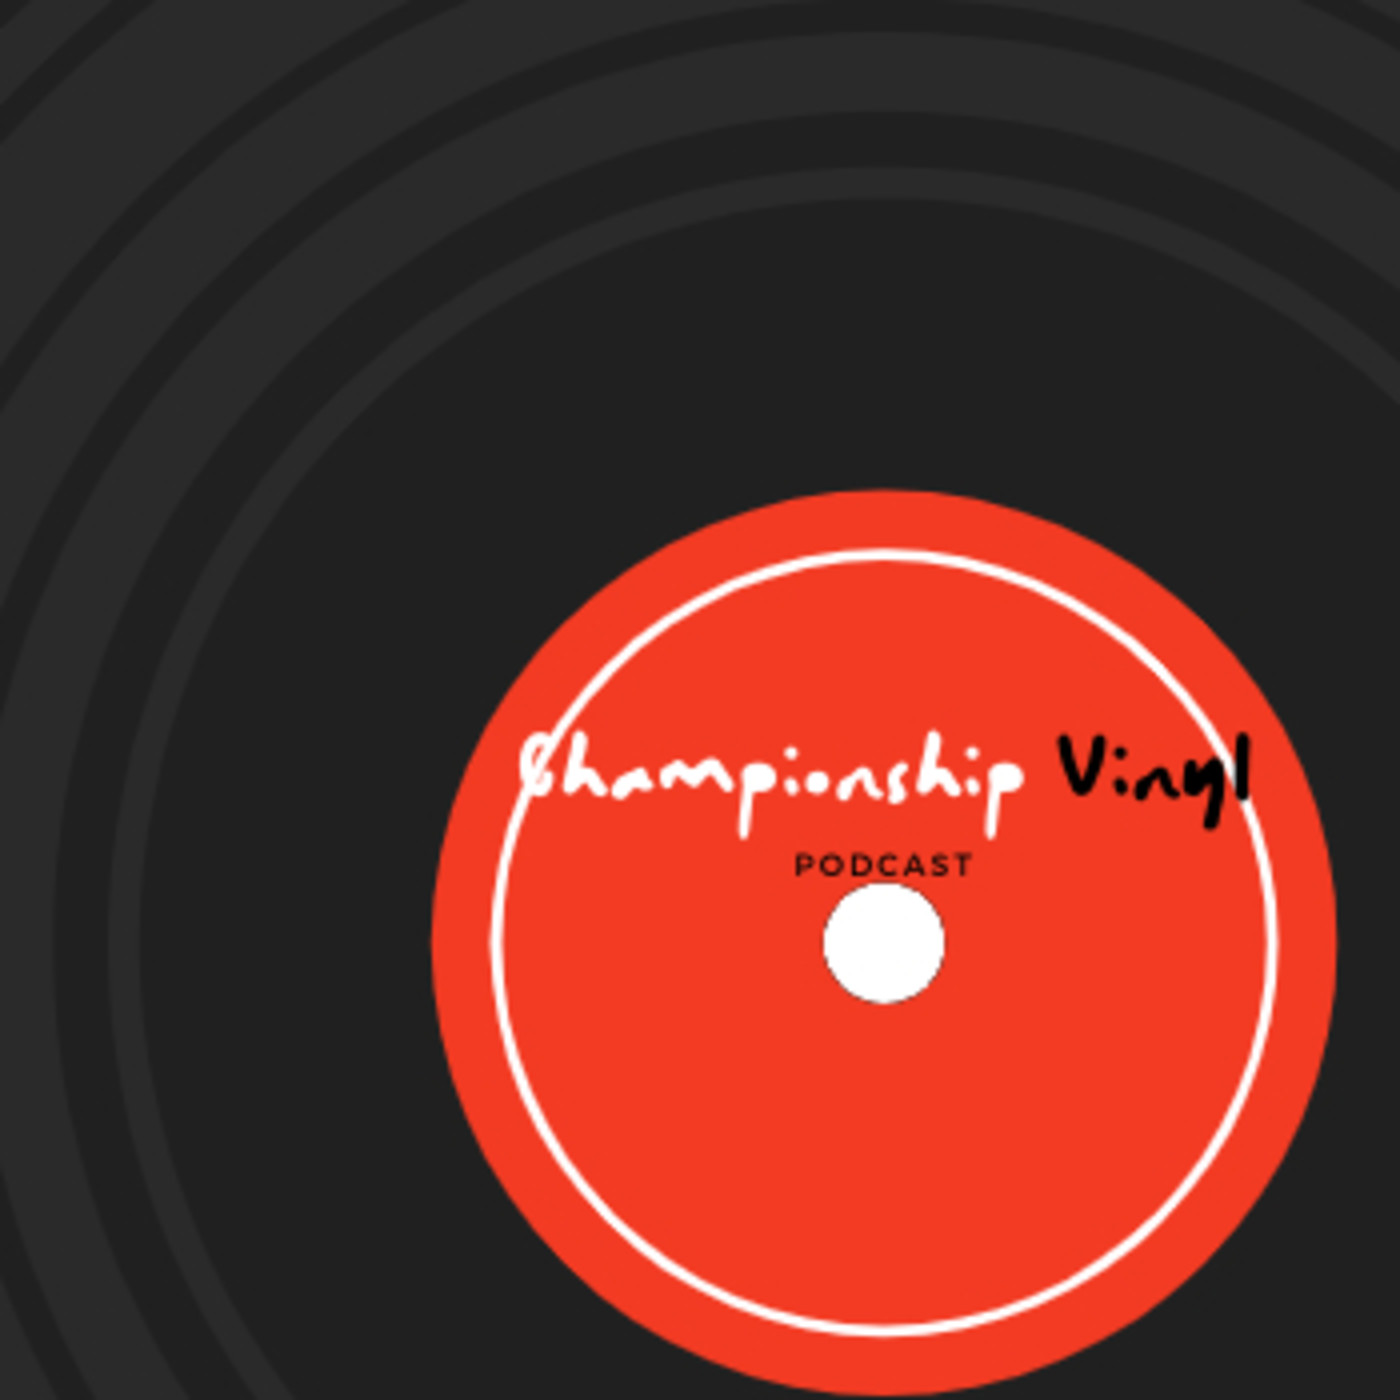 Championship Vinyl 05